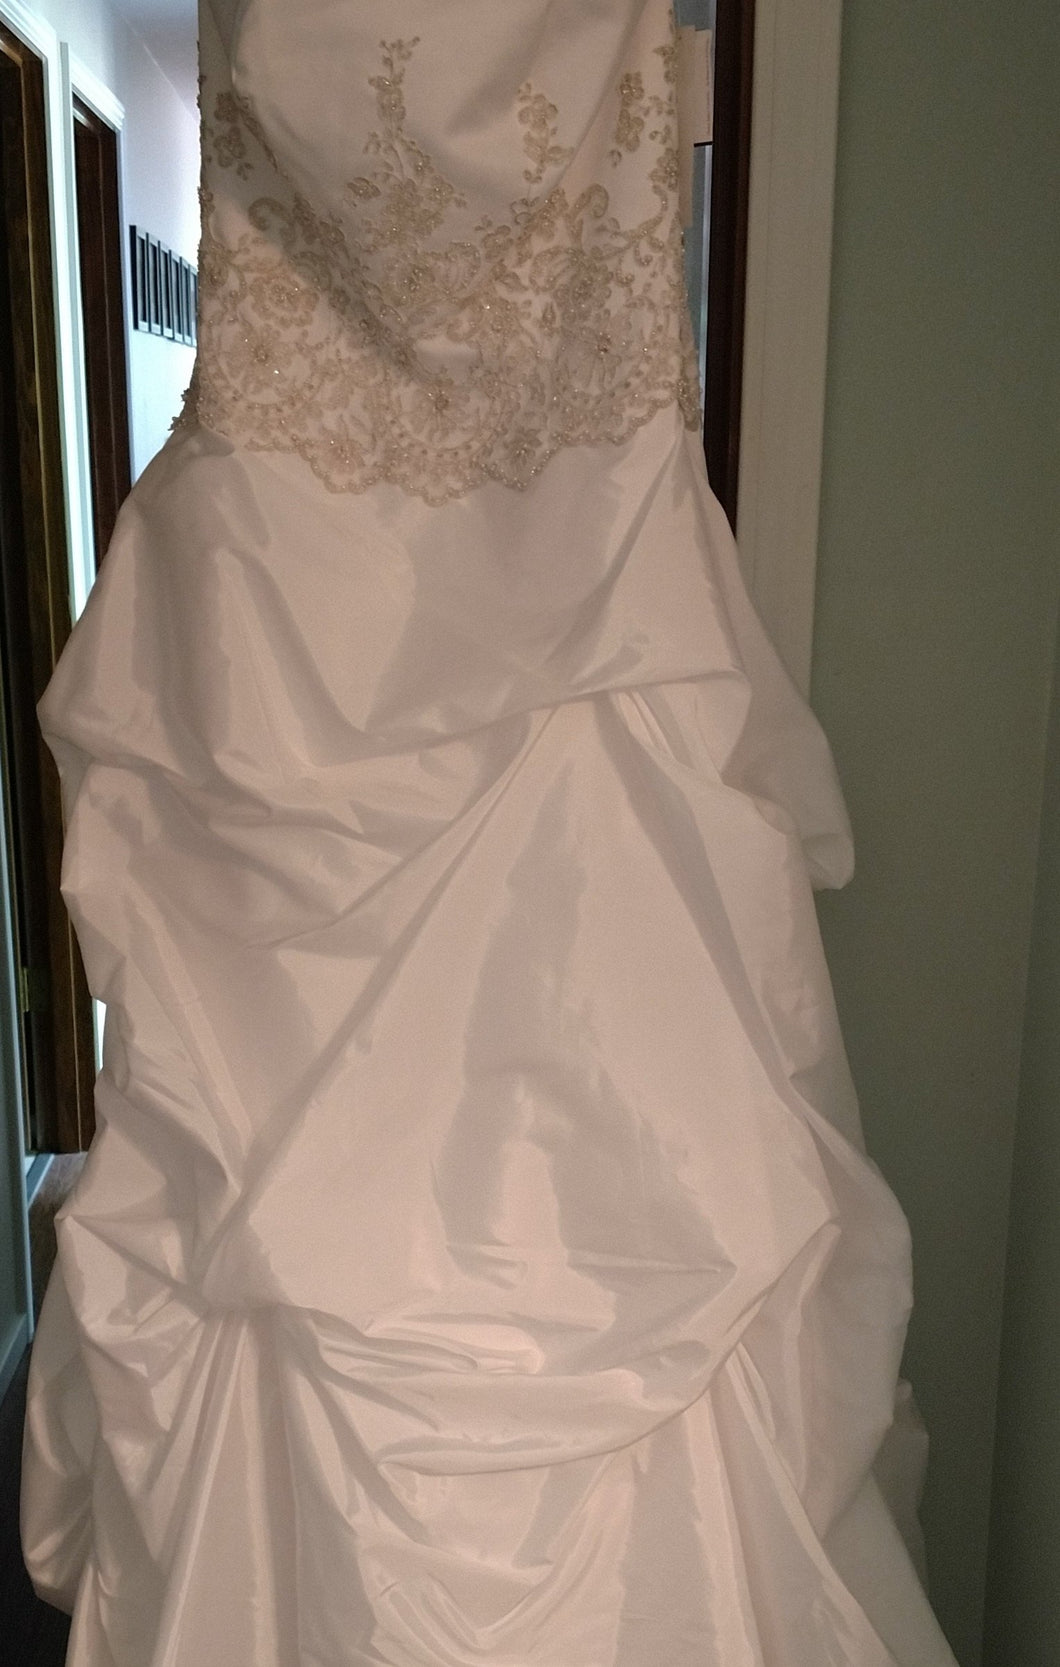 David's Bridal 'V9202' size 10 new wedding dress front view on hanger